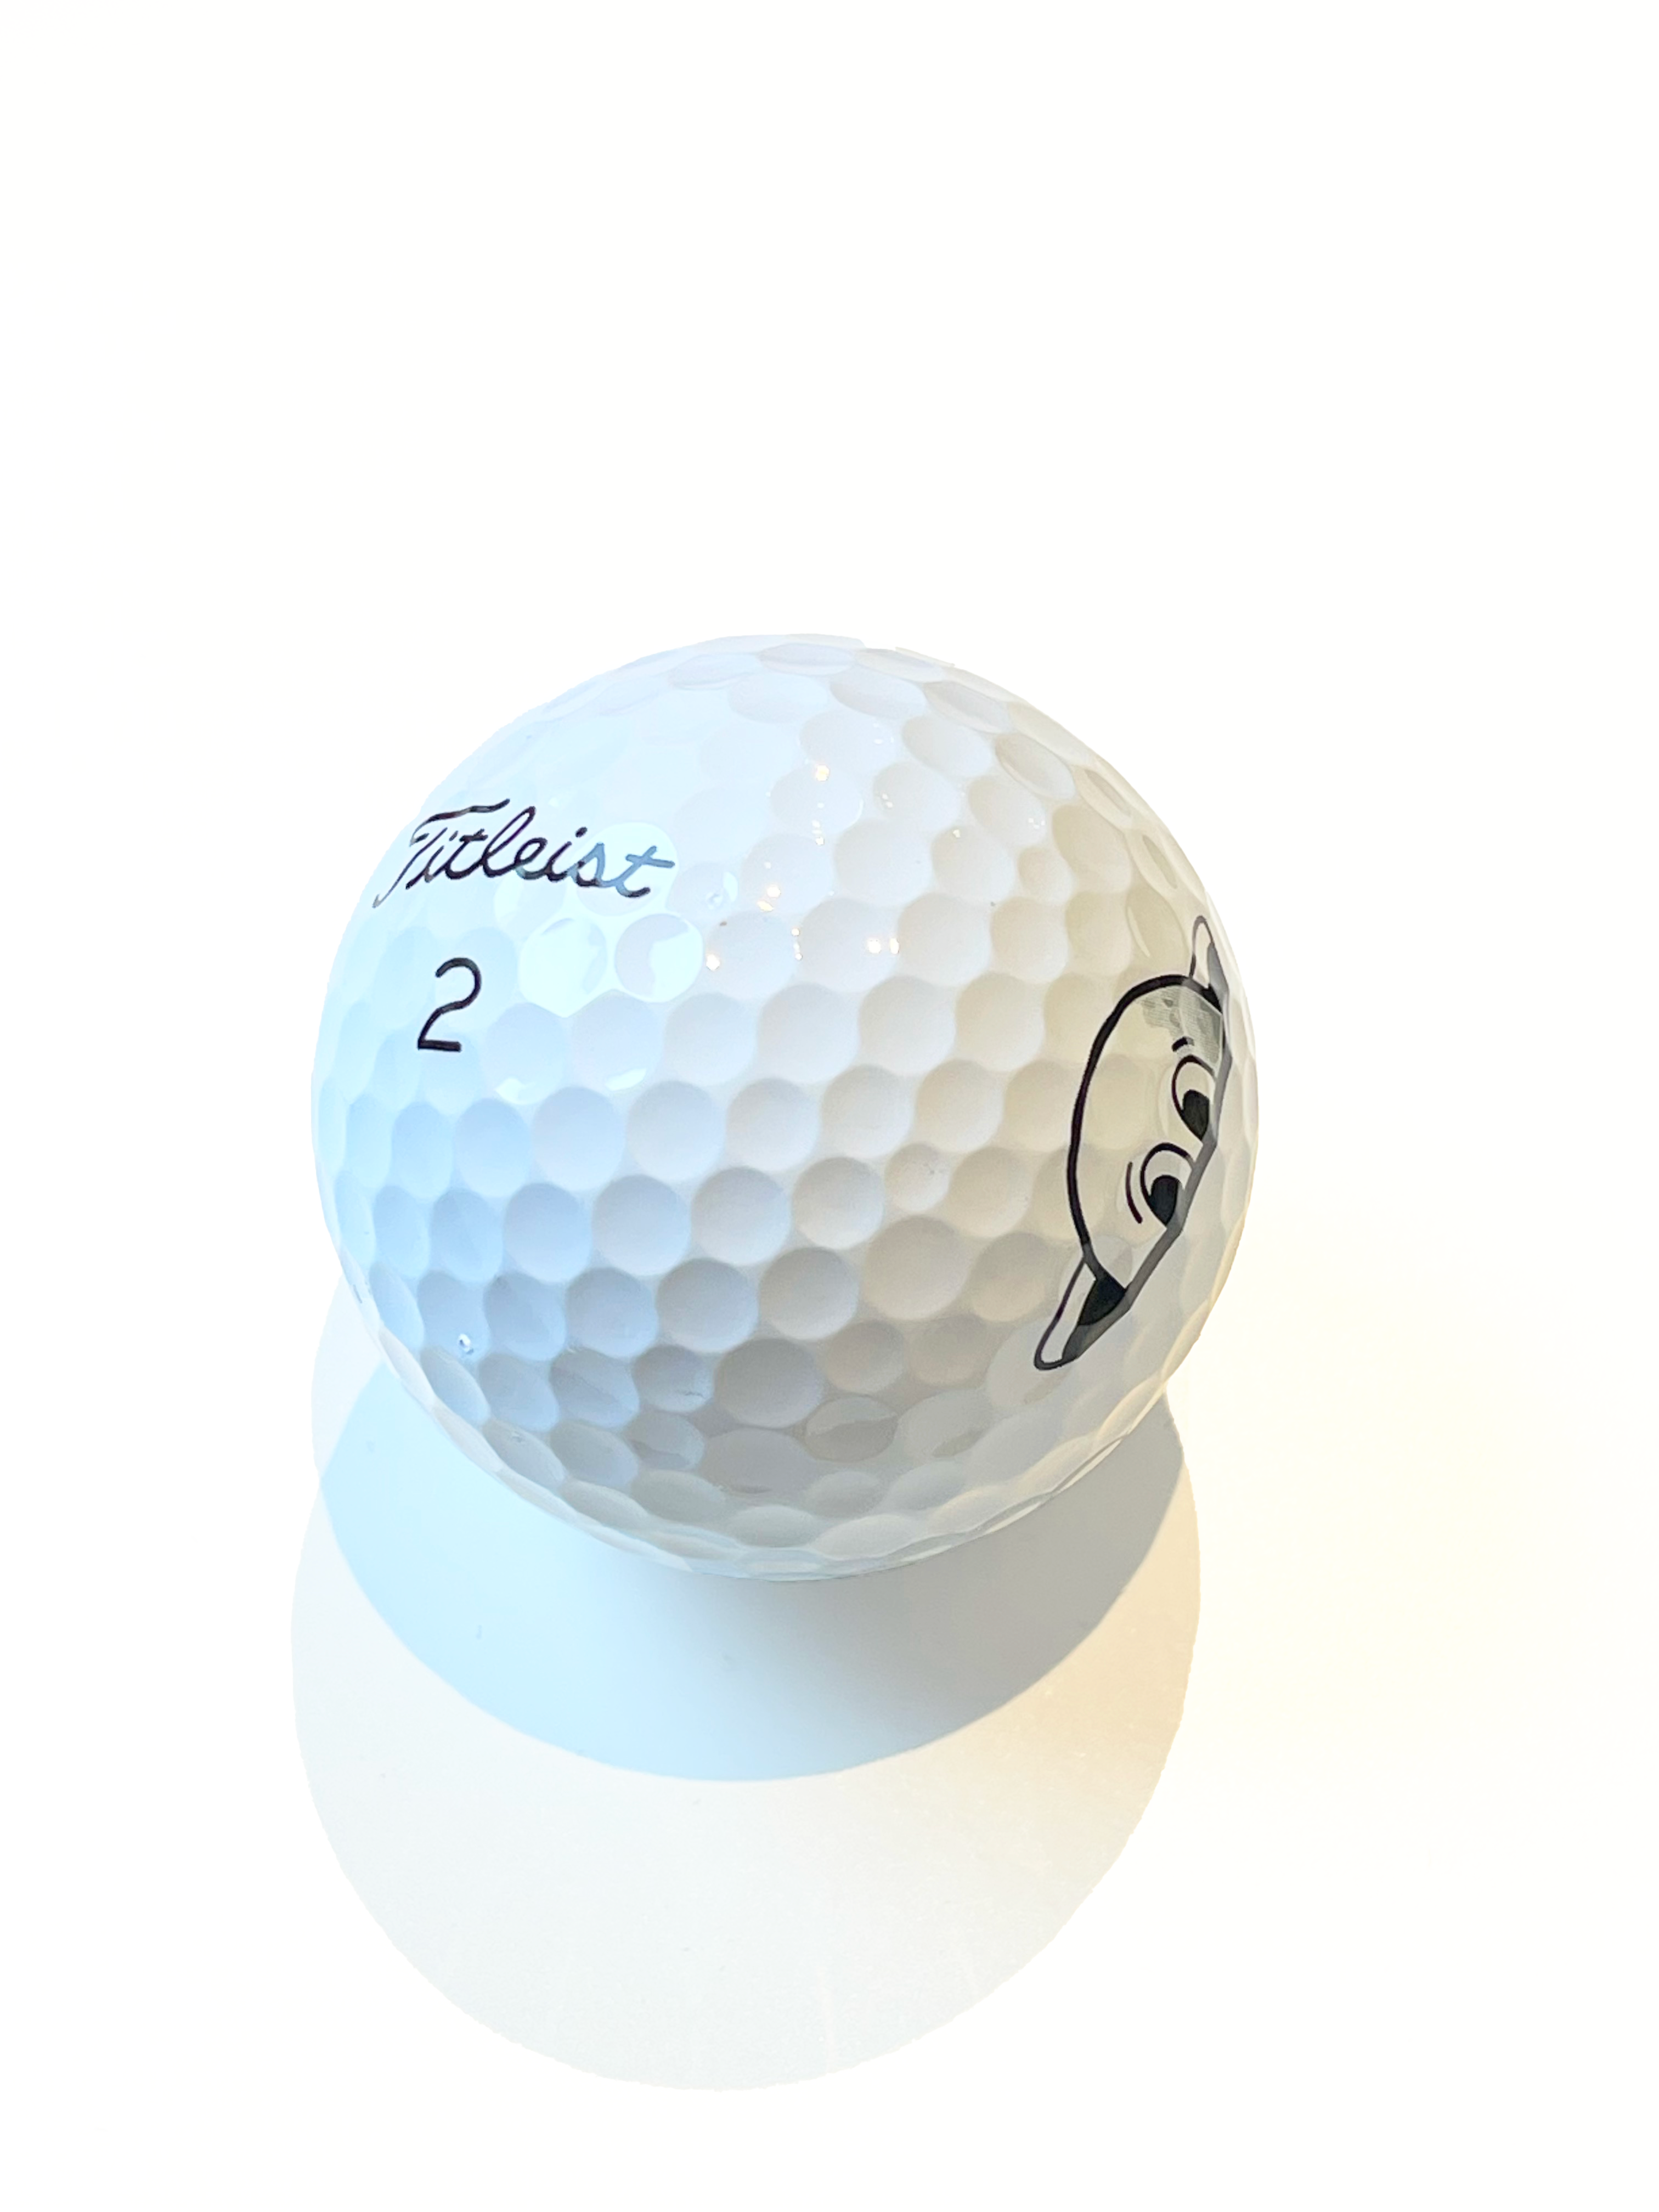 Limited Edition Titleist Pro(RAD)-V1 Golf Balls (Sold as Sleeves) - RADMOR